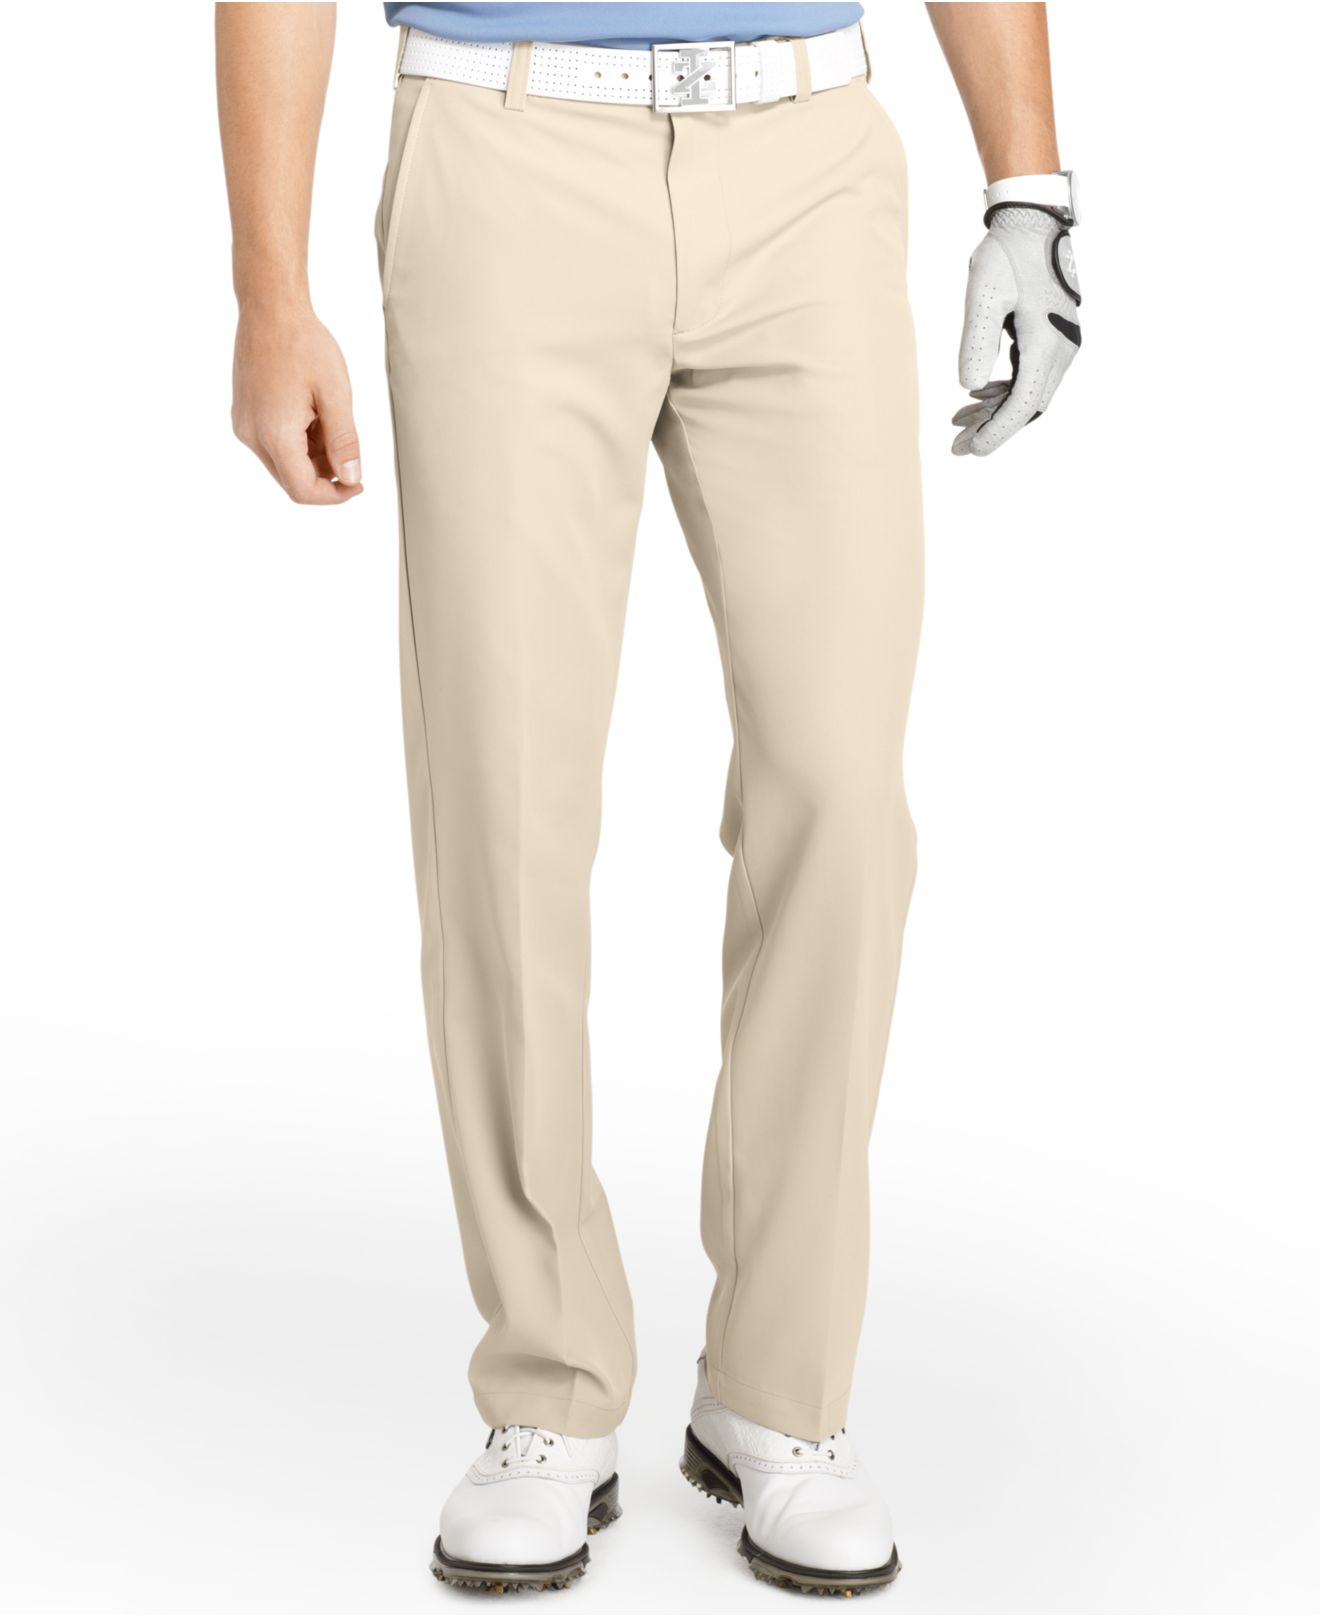 Lyst - Izod Golf Pants, Slim-fit Flat Front Pants in Blue for Men